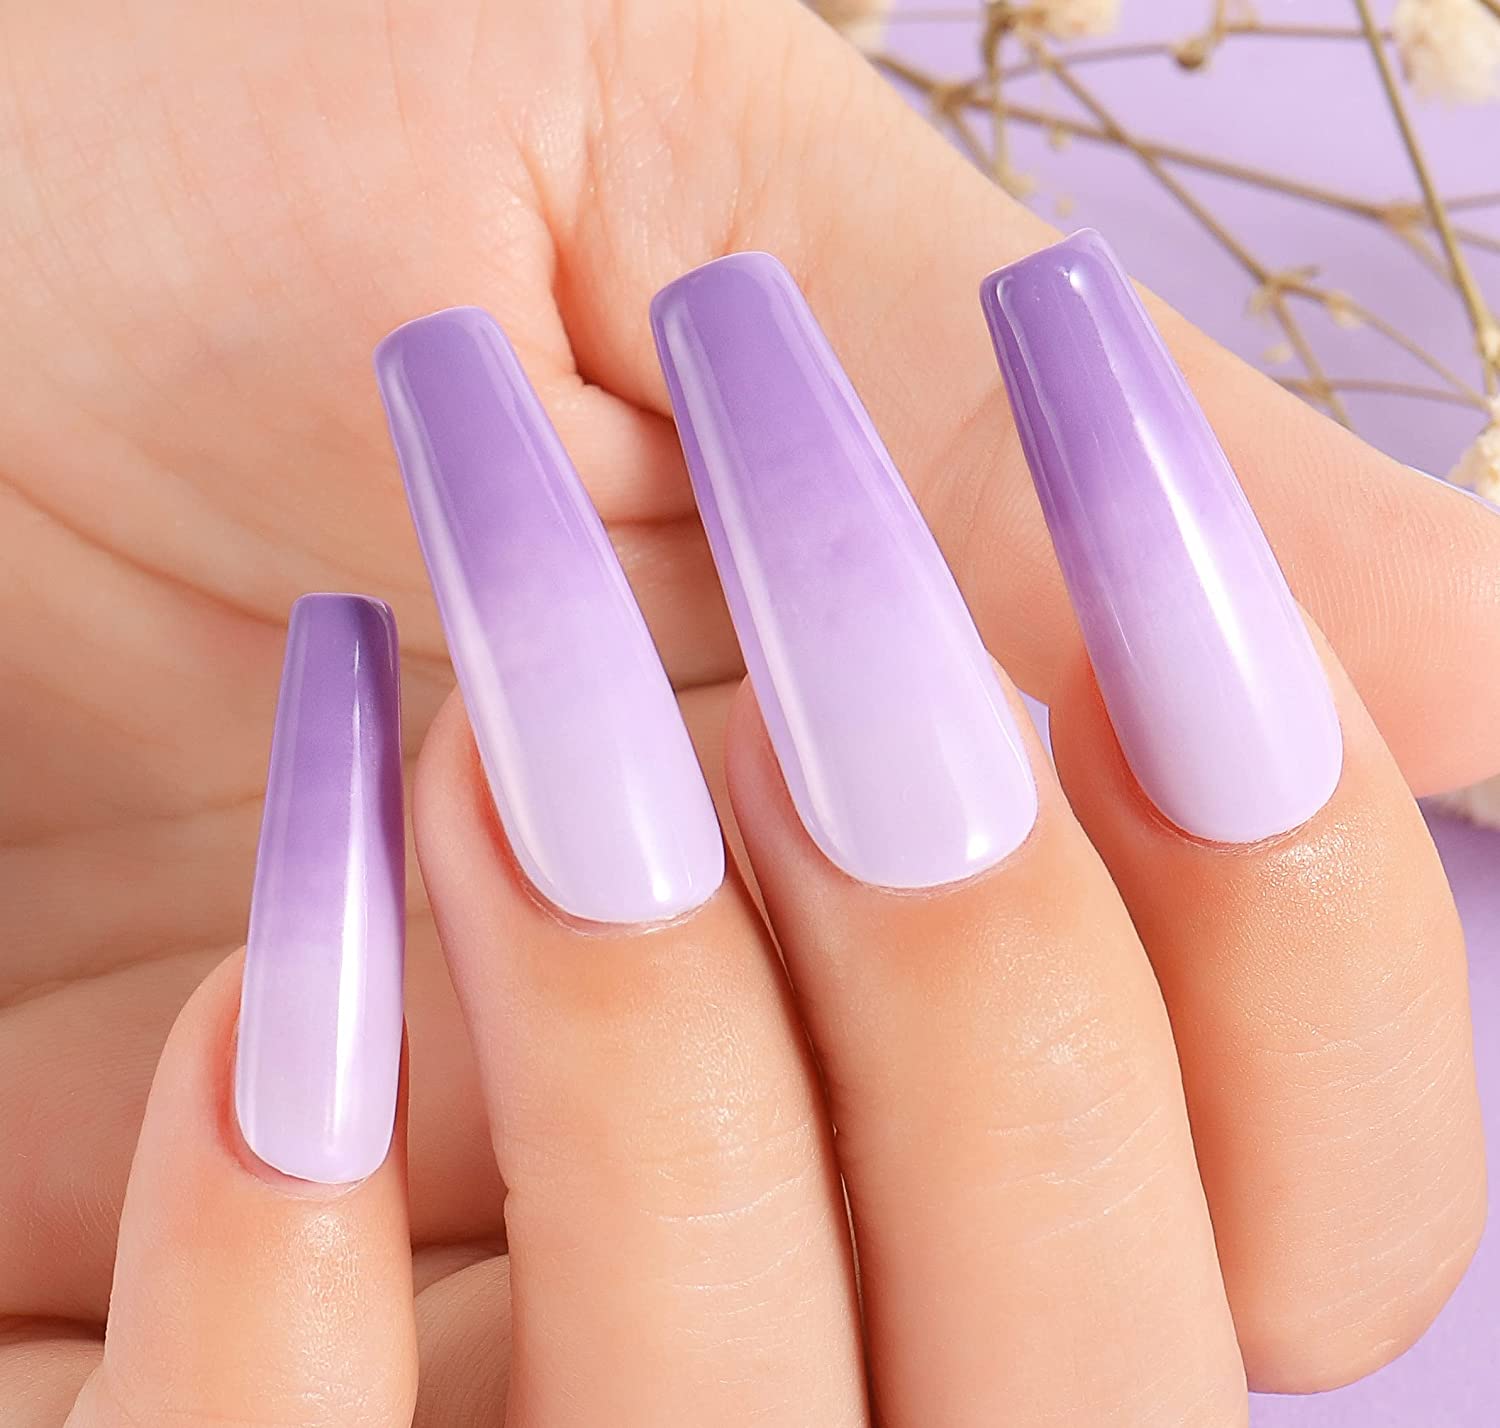 dark purple nail polish by jkfangirl on DeviantArt